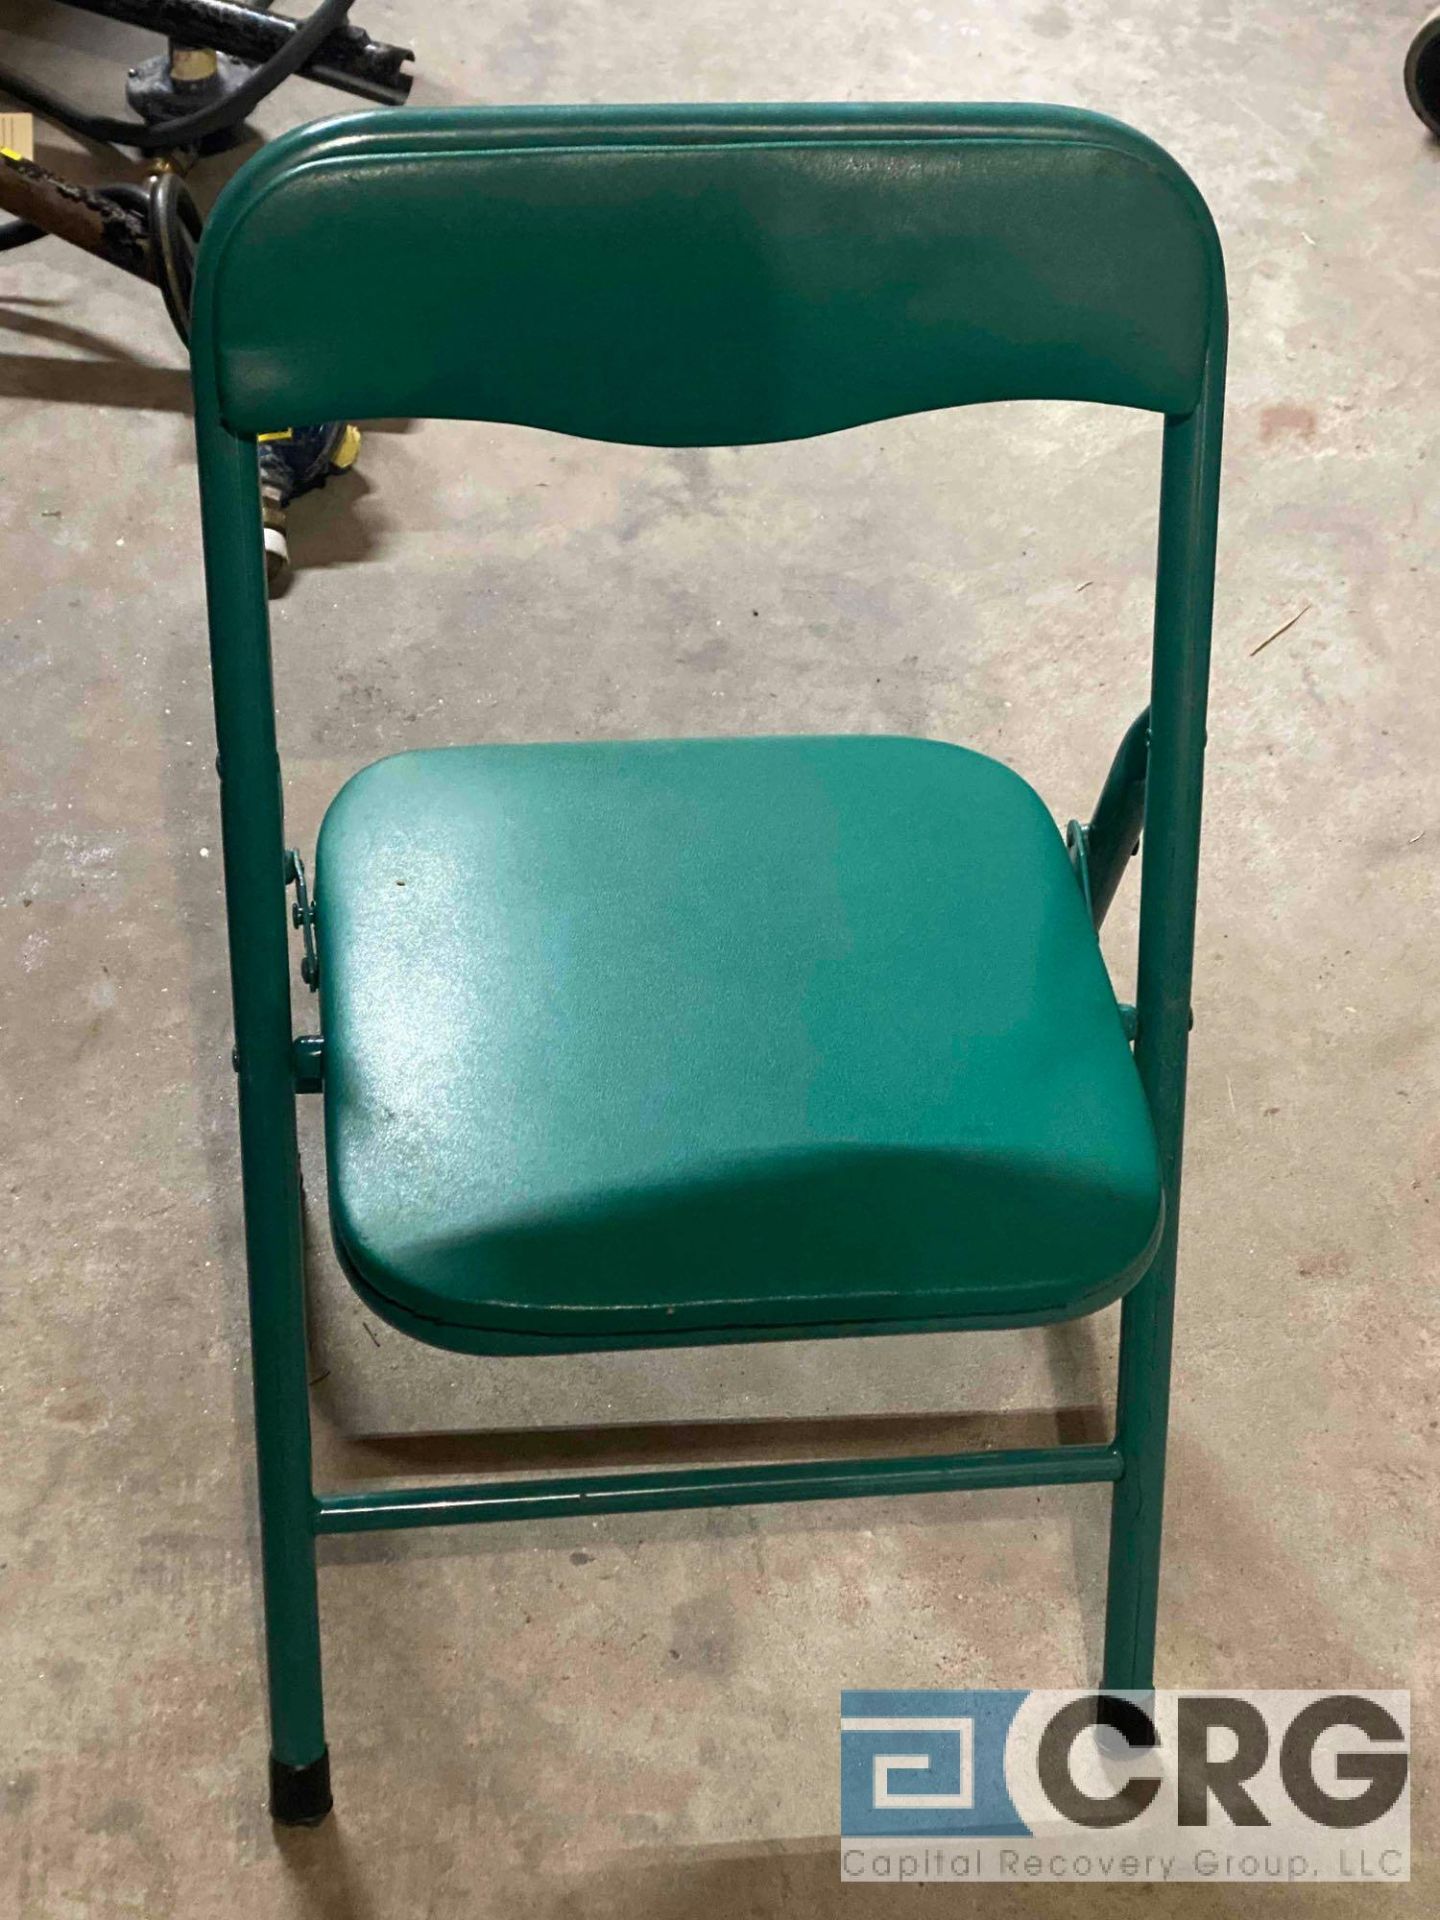 Children's Chairs